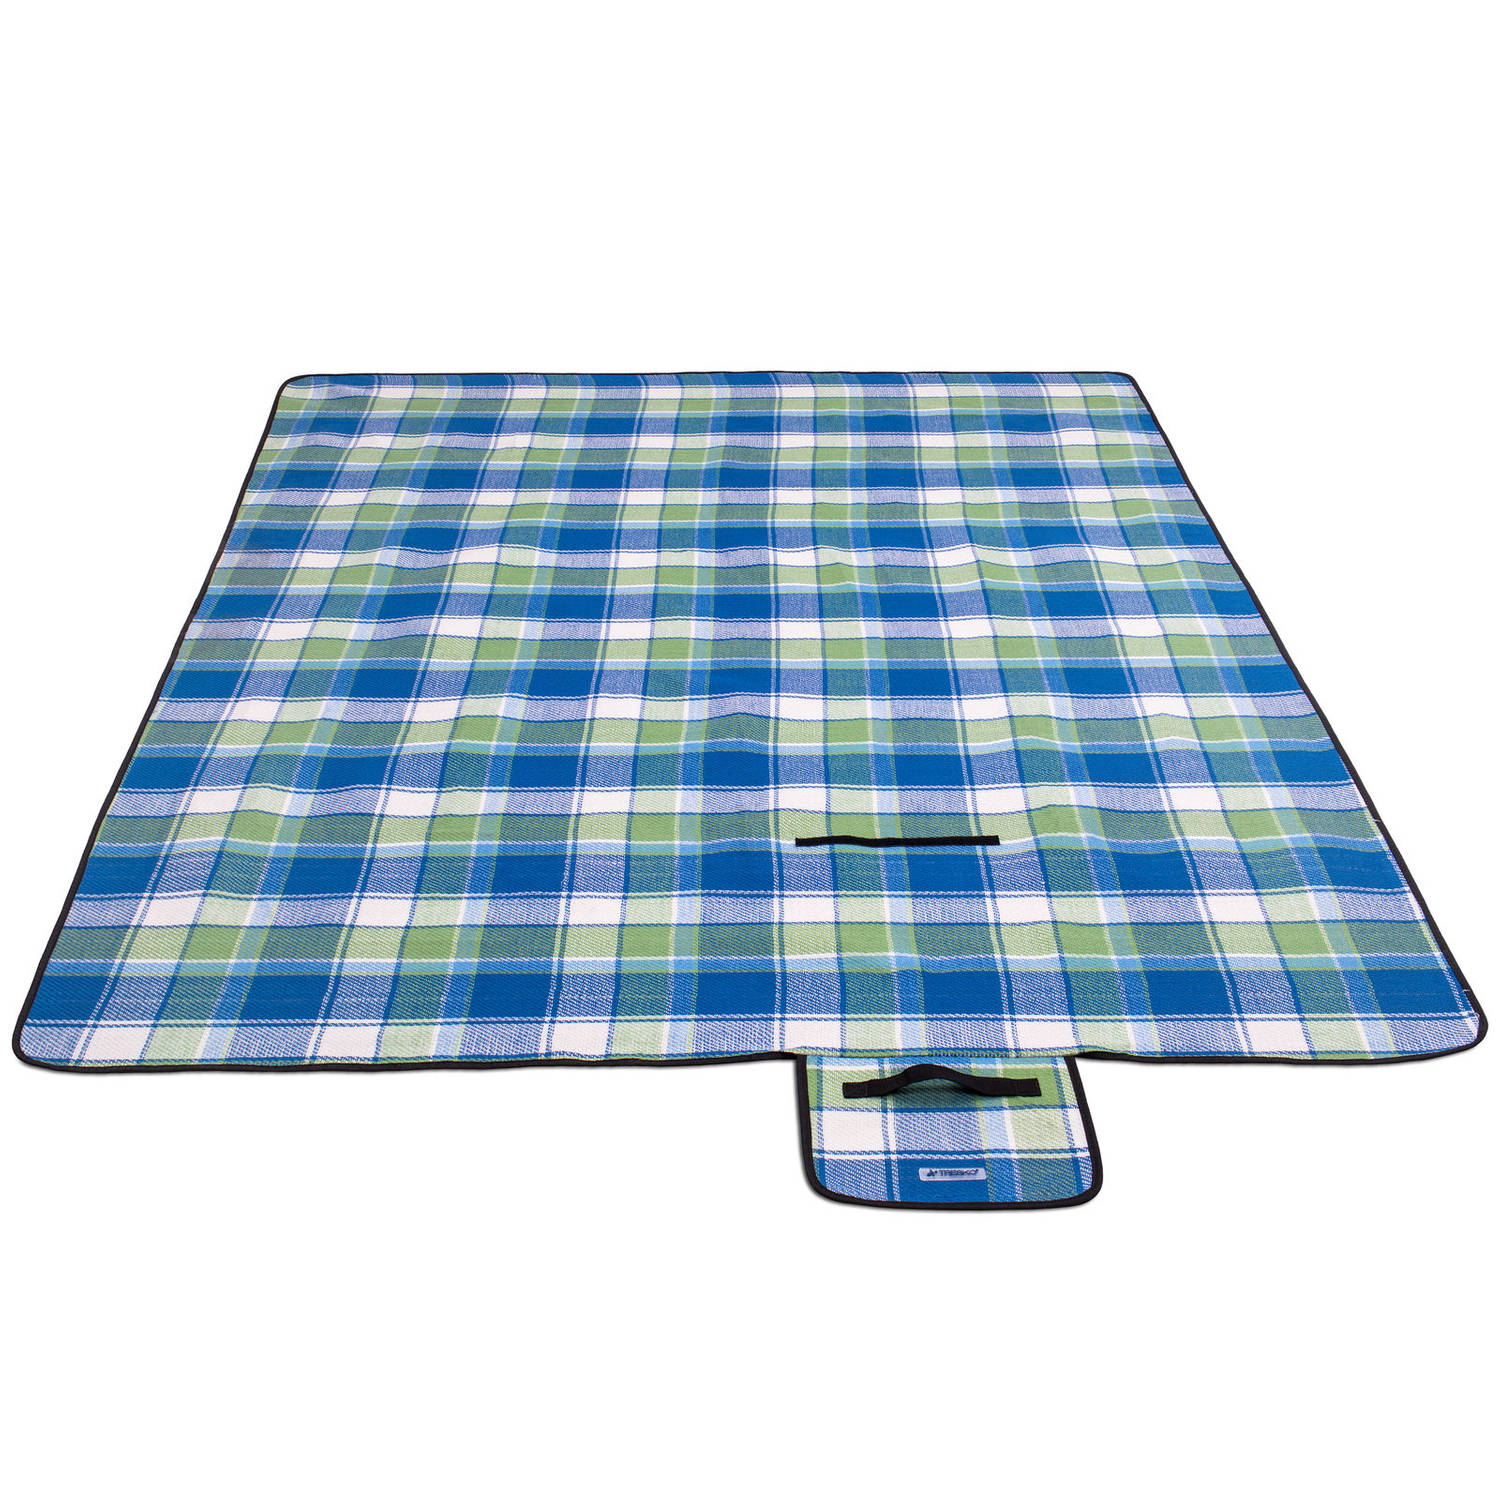 Picknickdeken, ruitmotief, blauw-groen-wit, picknickkleed, 195 x 150 m, waterdicht, campingdeken, outdoor plaid, stra...